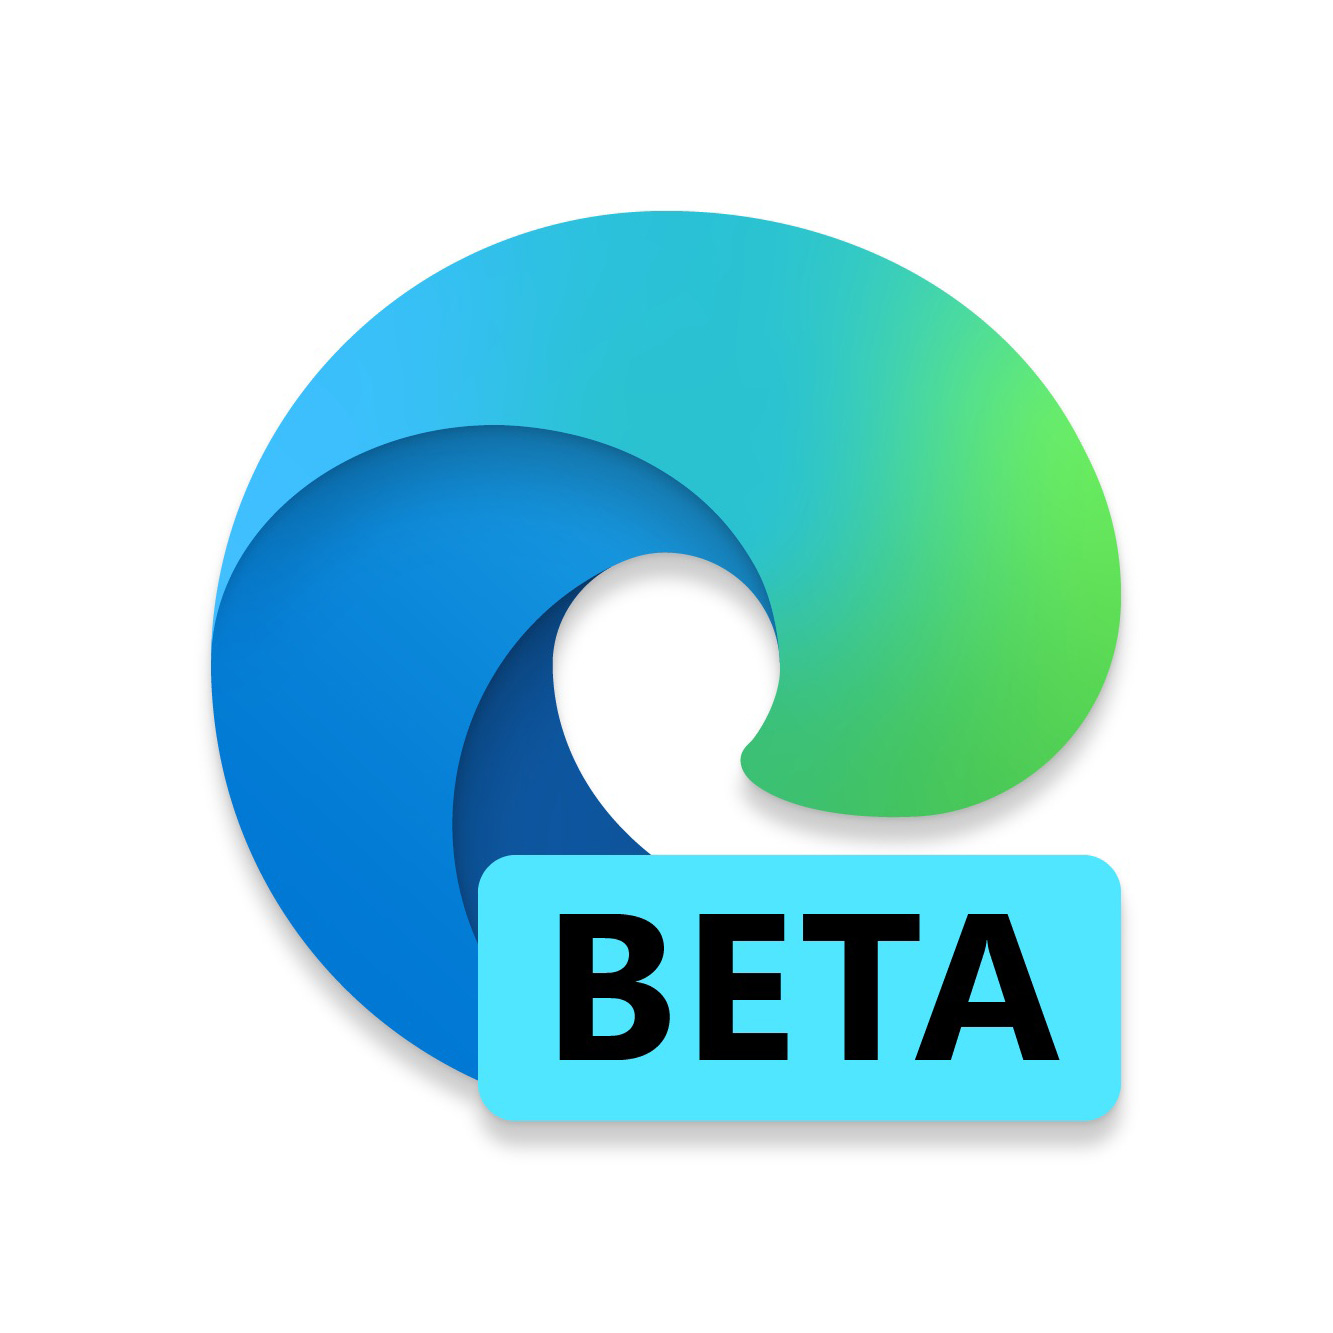 Microsoft Edge beta